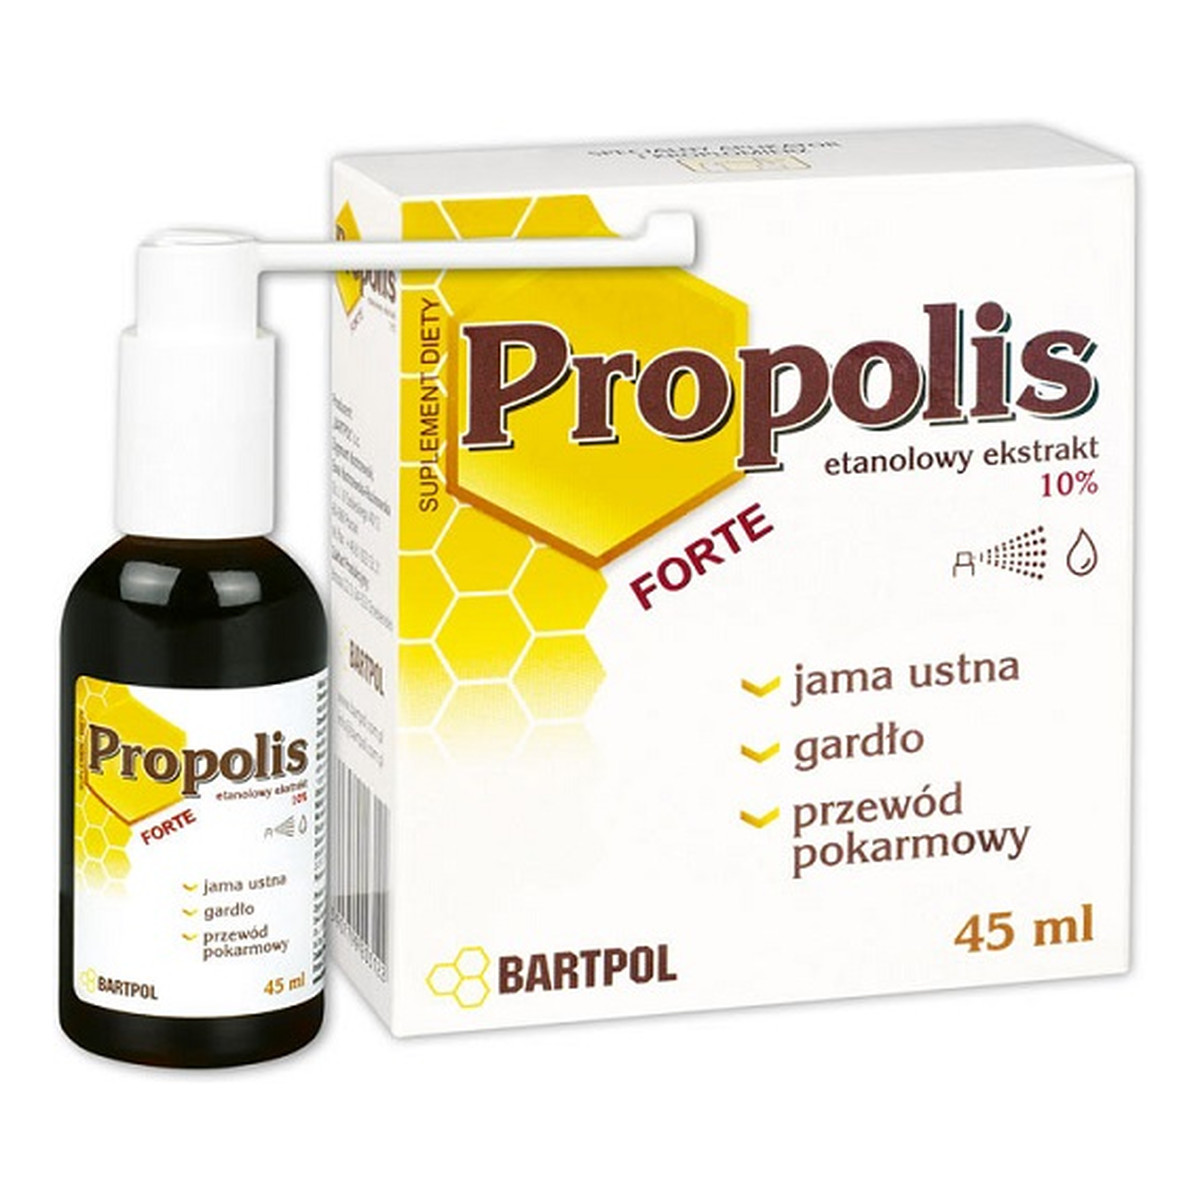 Bartpol Propolis forte etanolowy ekstrakt 10% suplement diety 45ml